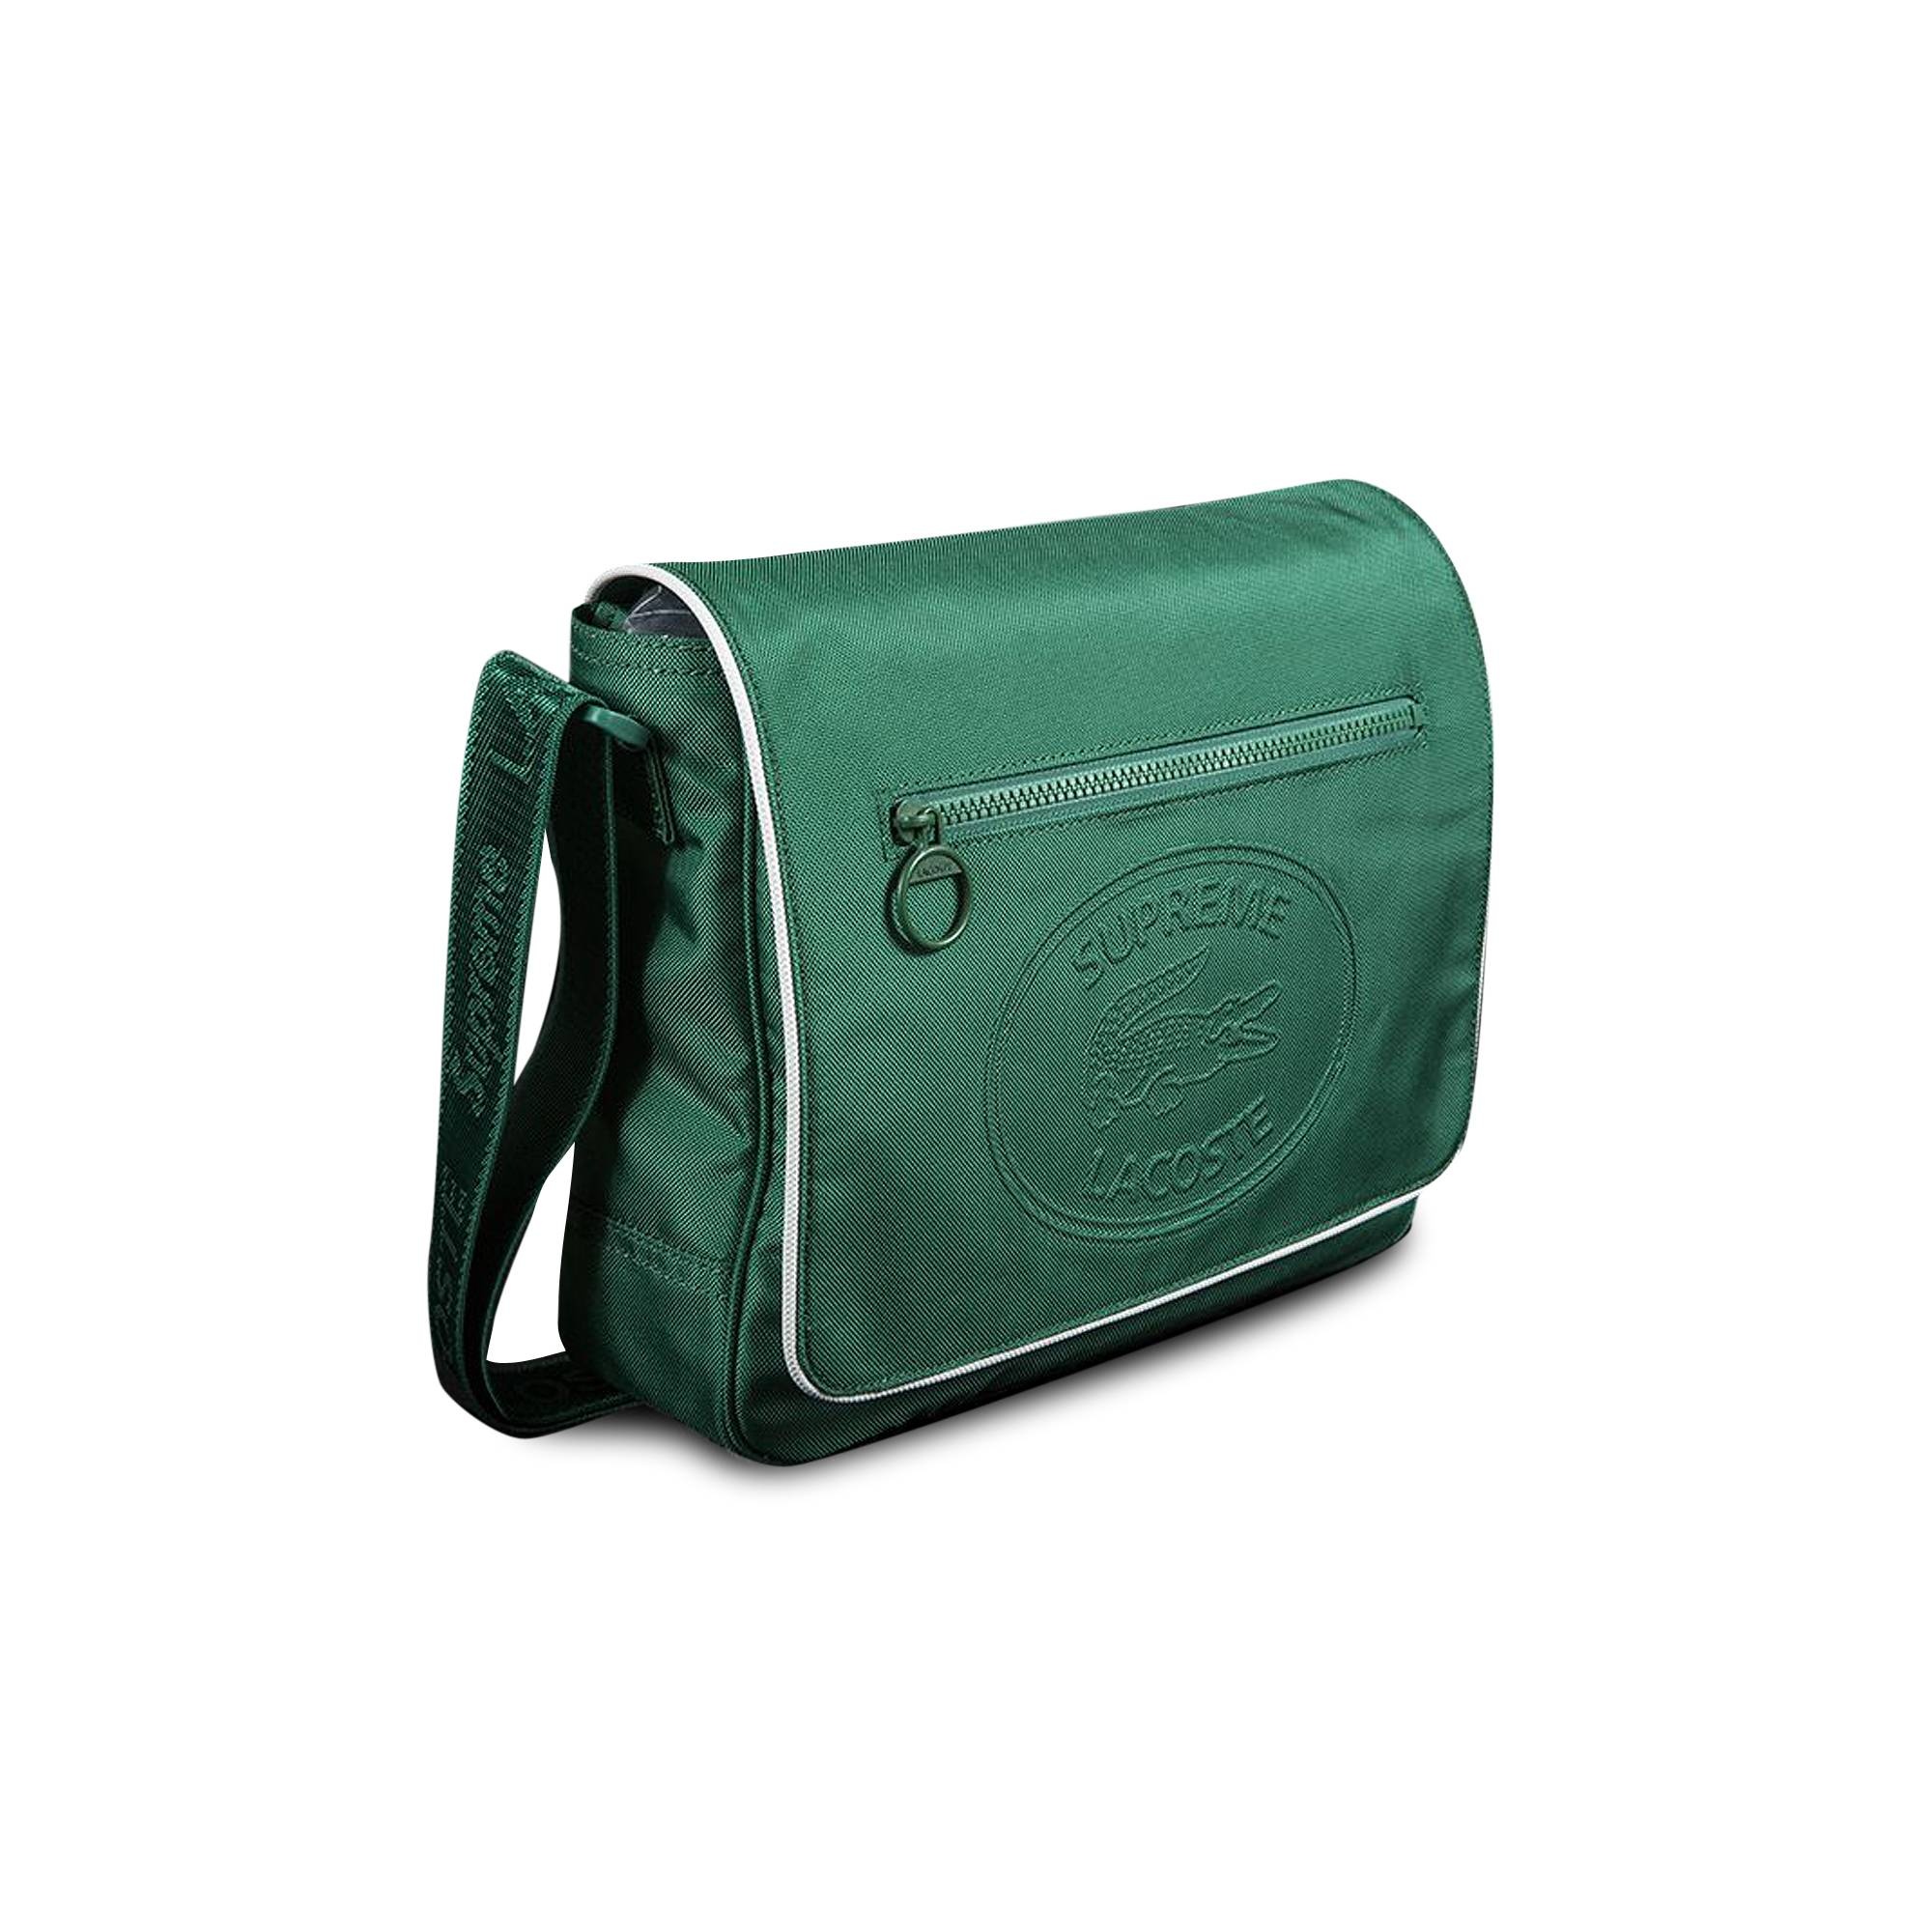 Supreme Supreme x Lacoste Small Messenger Bag 'Green' | REVERSIBLE